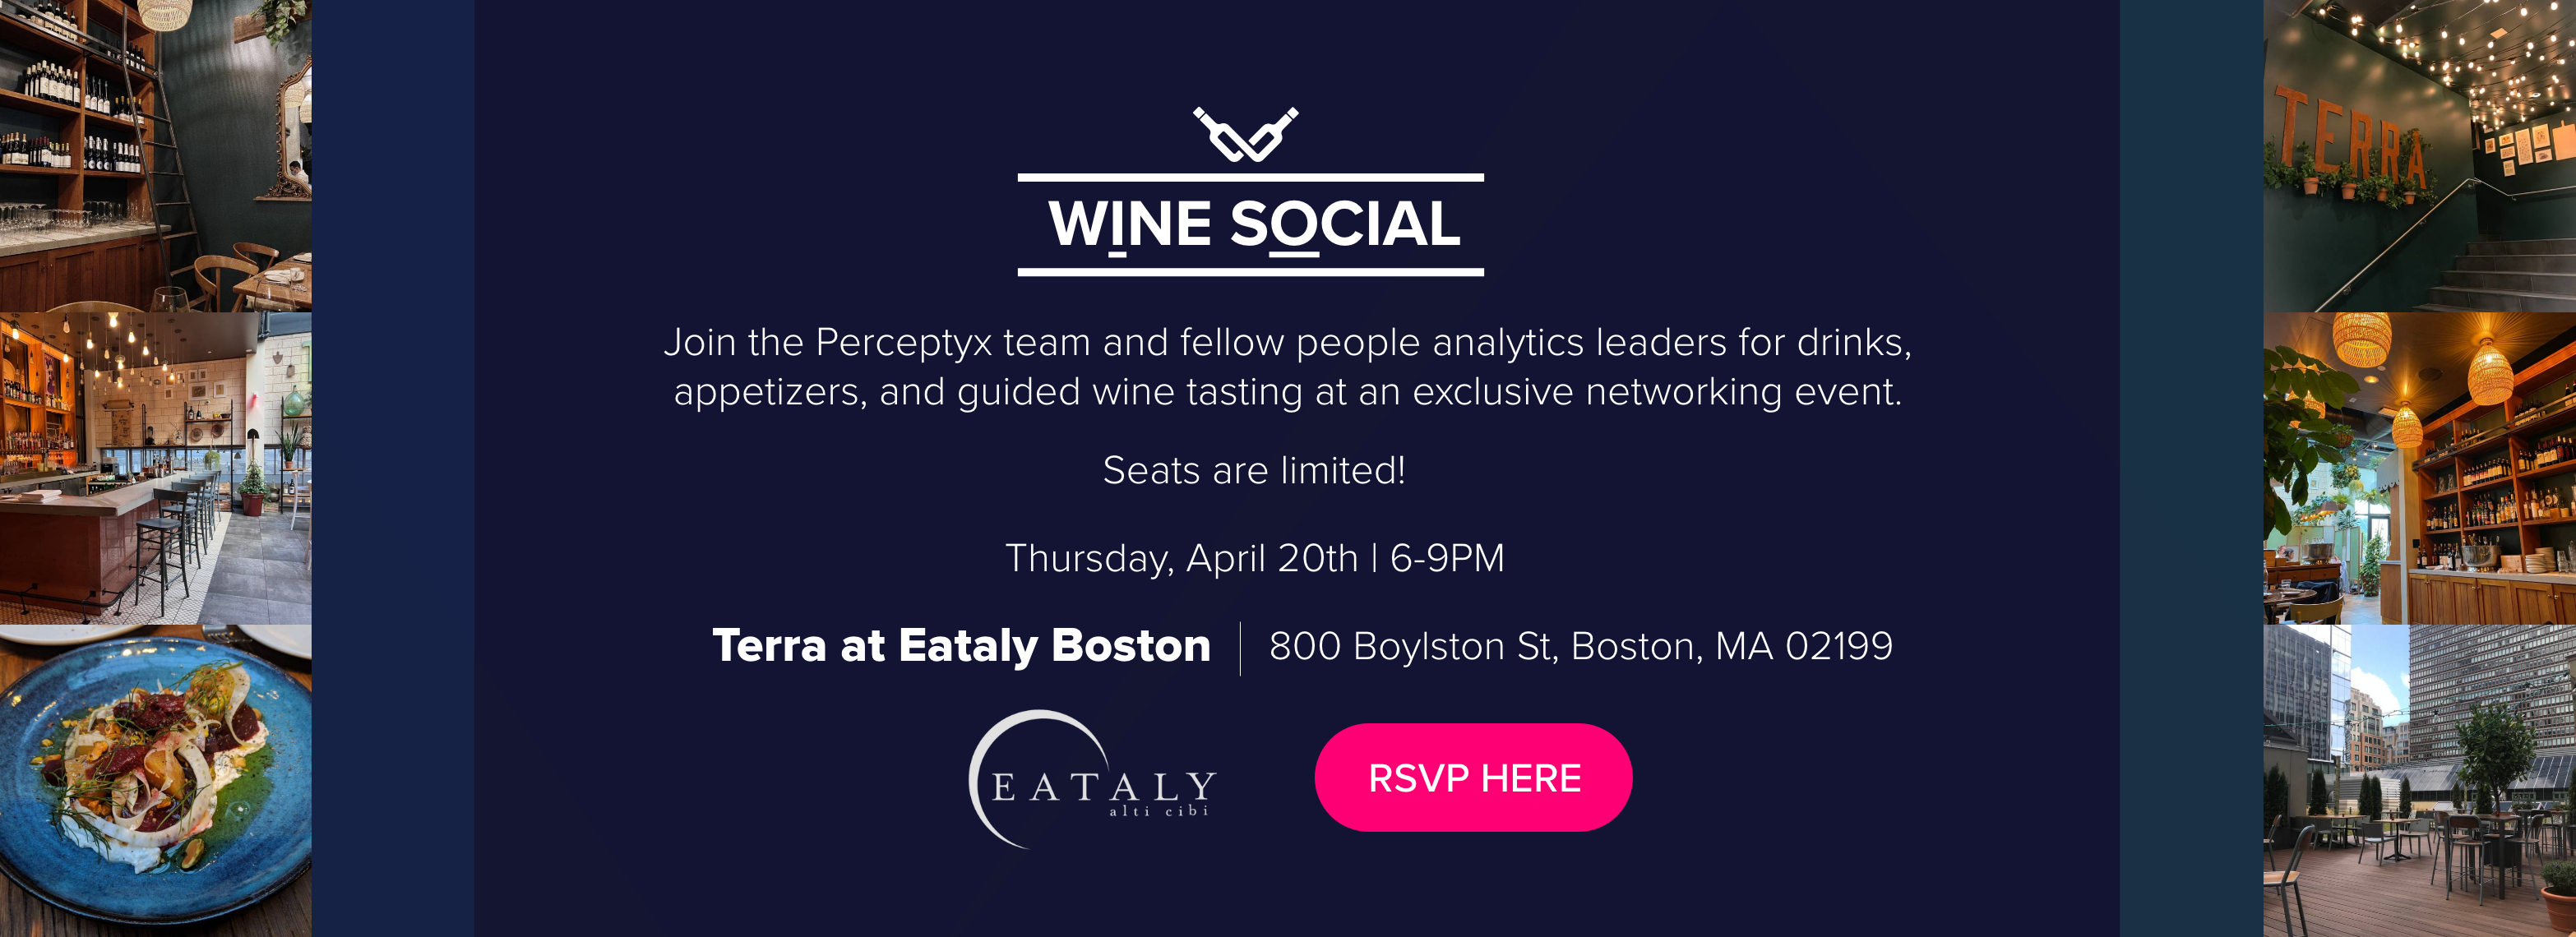 Boston-winesocial-banner-invite